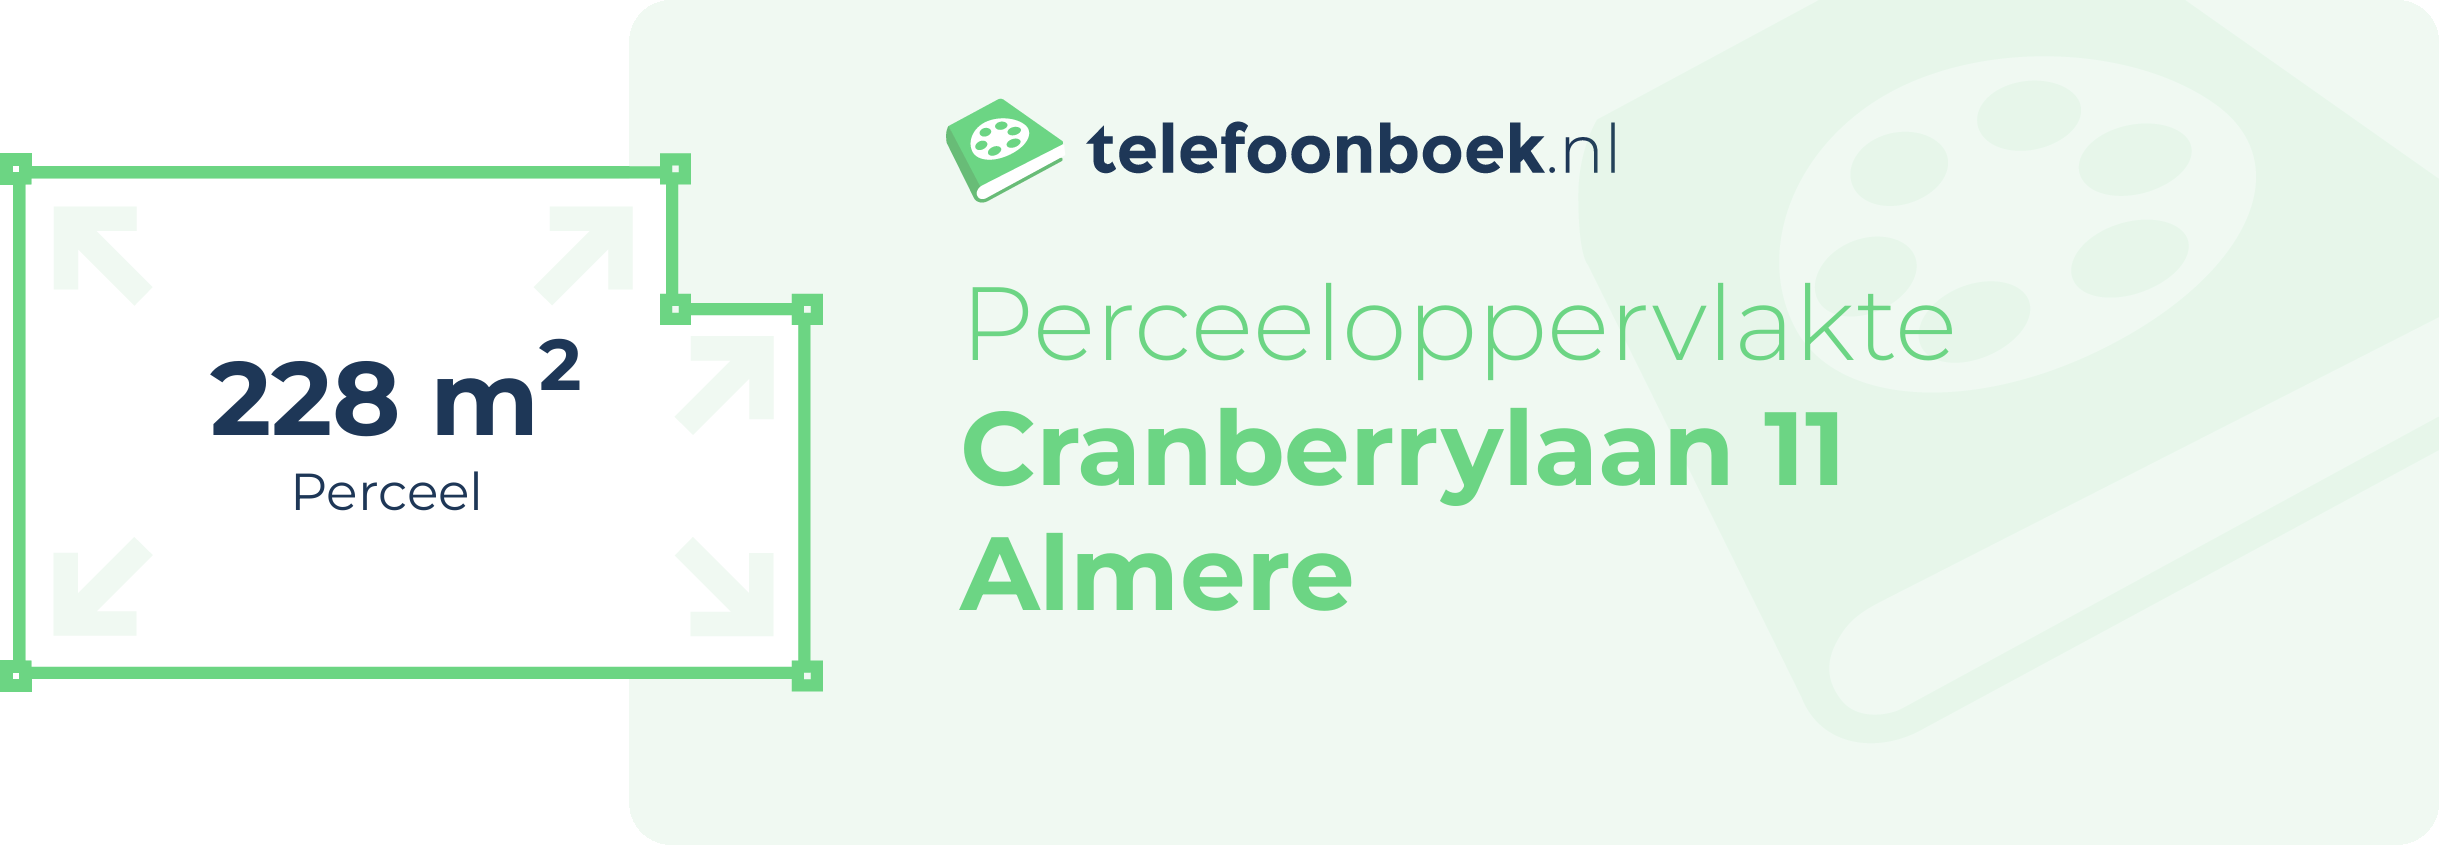 Perceeloppervlakte Cranberrylaan 11 Almere